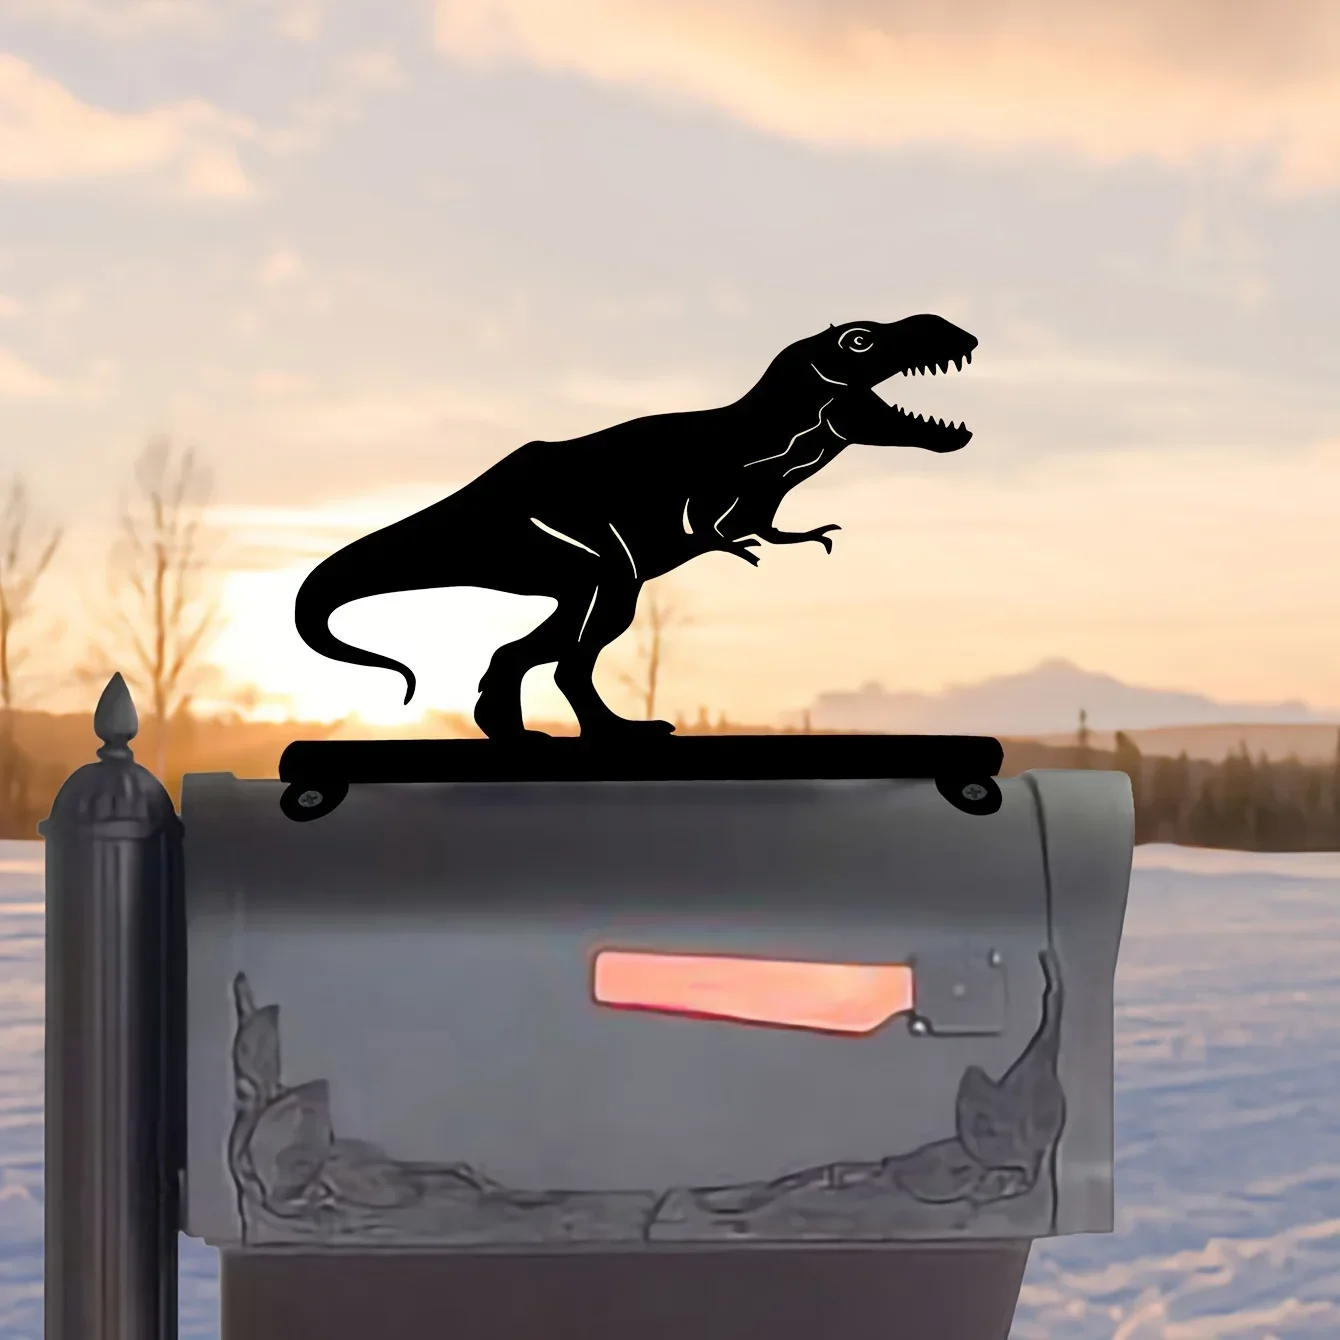 

HELLOYOUNG Dinosaur Iron Art Silhouette Mailbox Top Decoration Decorative Mailbox Signage Mailbox Decoration